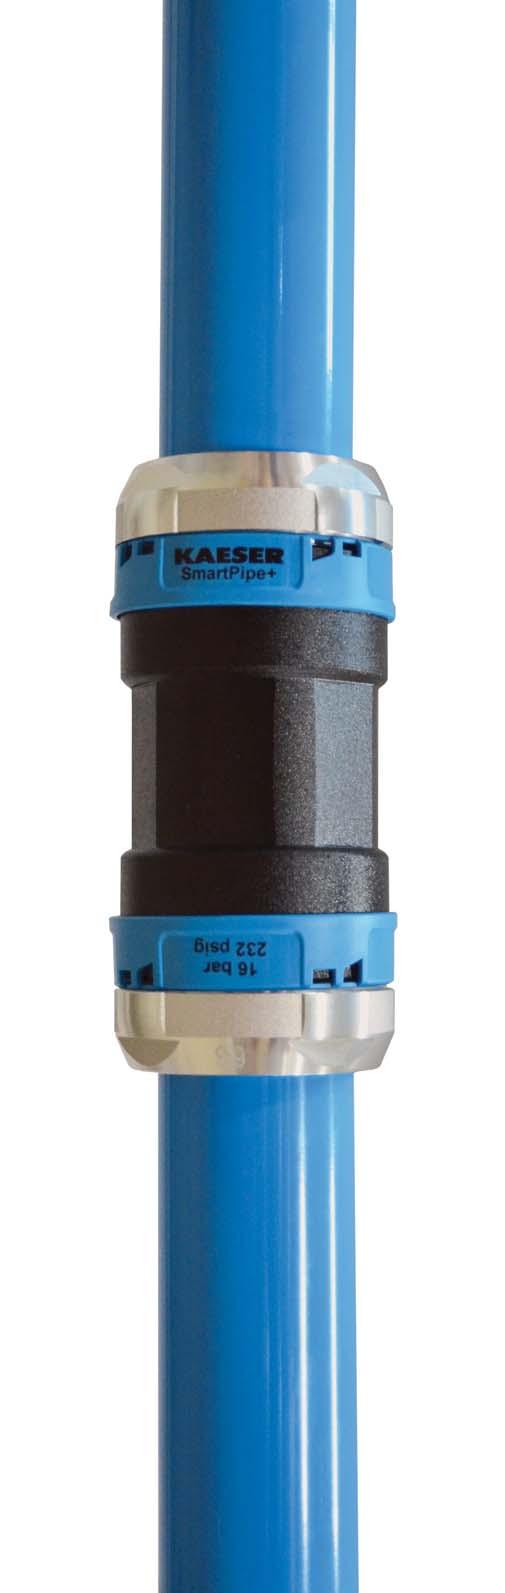 10-year warranty www.kaeser.com Kaeser Compressors, Inc. 511 Sigma Drive Fredericksburg, VA 22408 USA Telephone: 540-898-5500 Toll Free: 800-777-7873 info.usa@kaeser.com Kaeser Compressors Canada Inc.